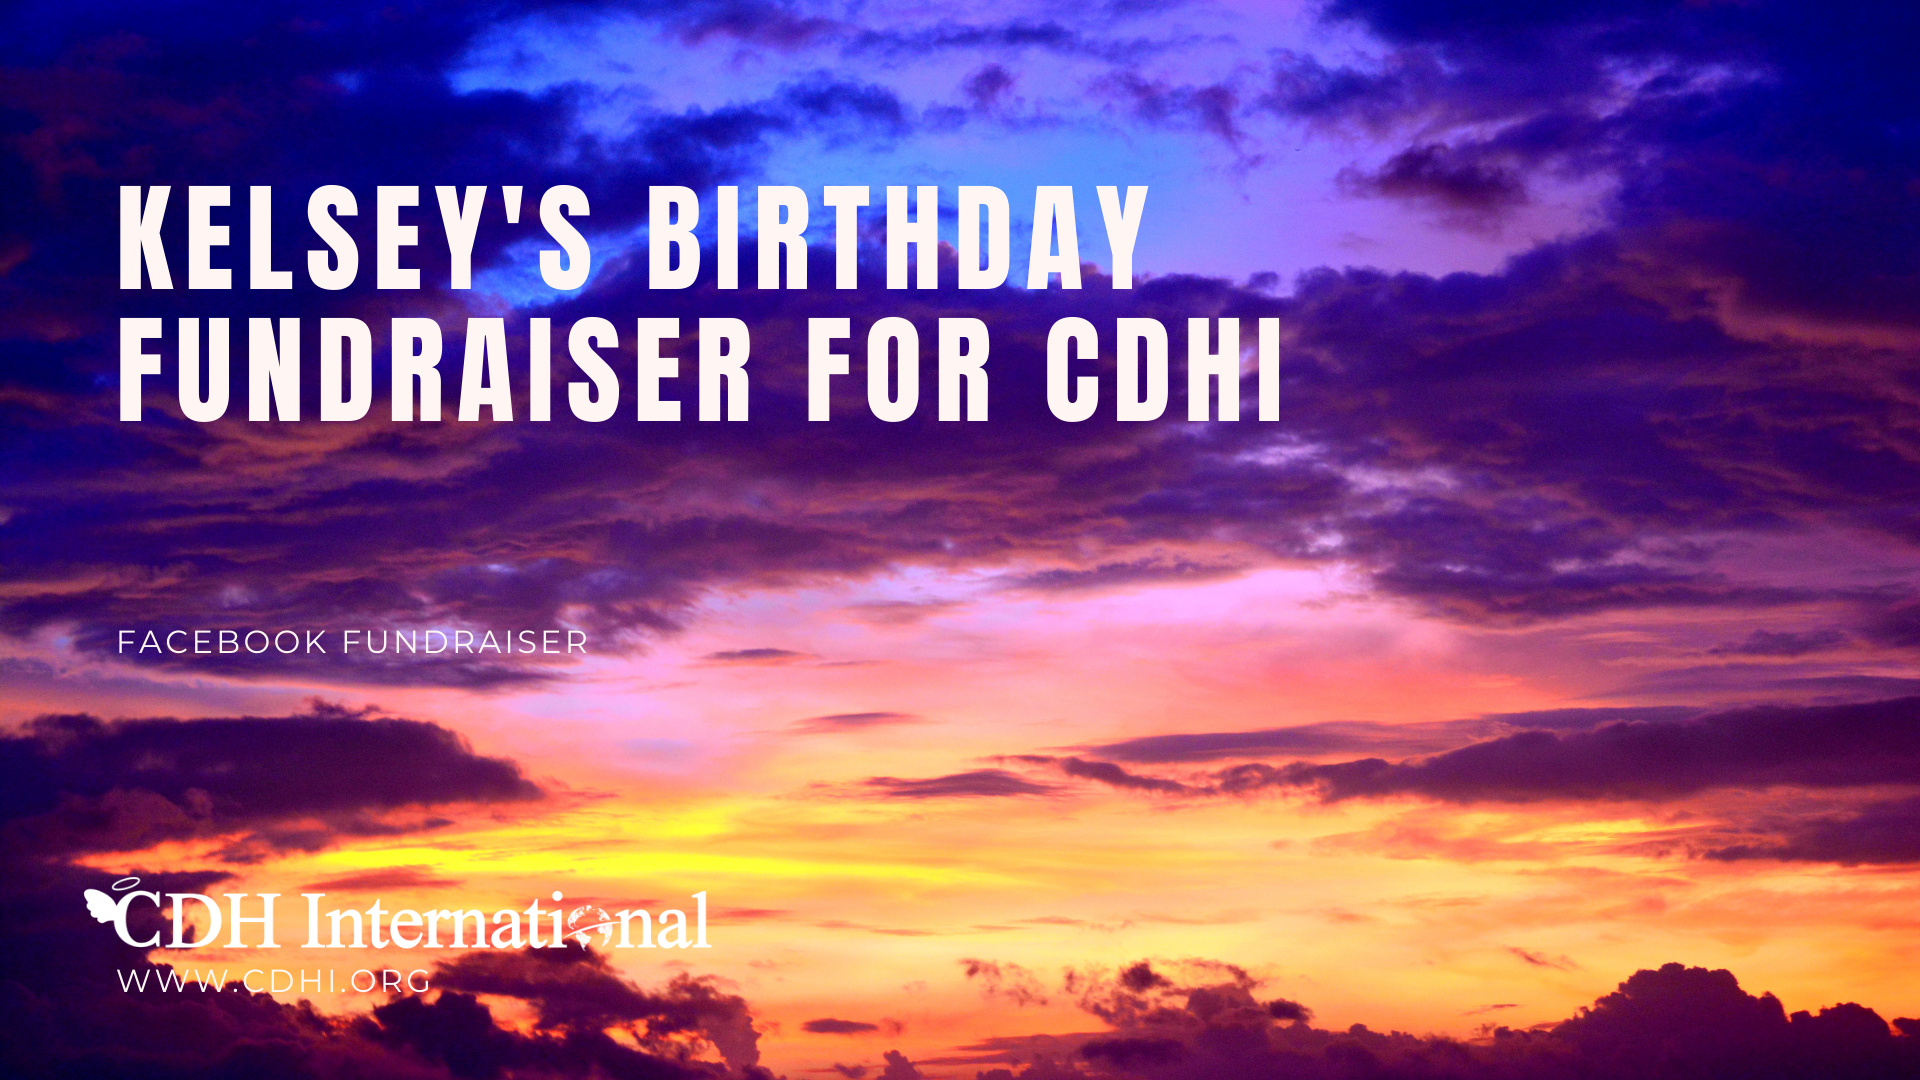 Marty’s Birthday Fundraiser for CDHi